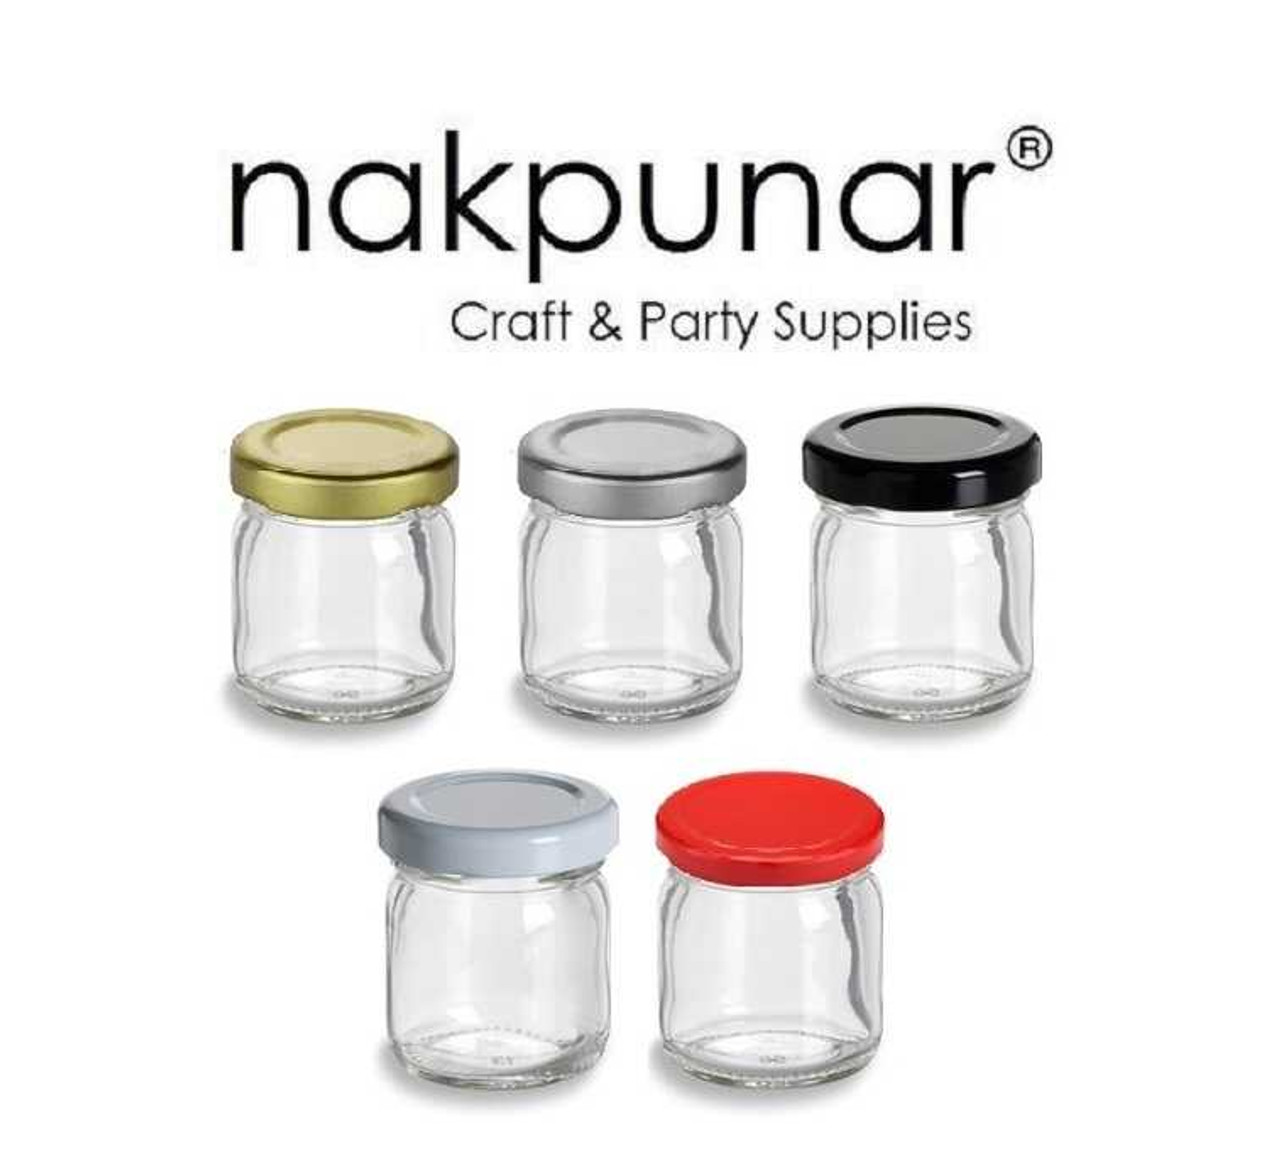 Mini Mason Jars Round 4 oz - Small Canning Glass Jars with Lids